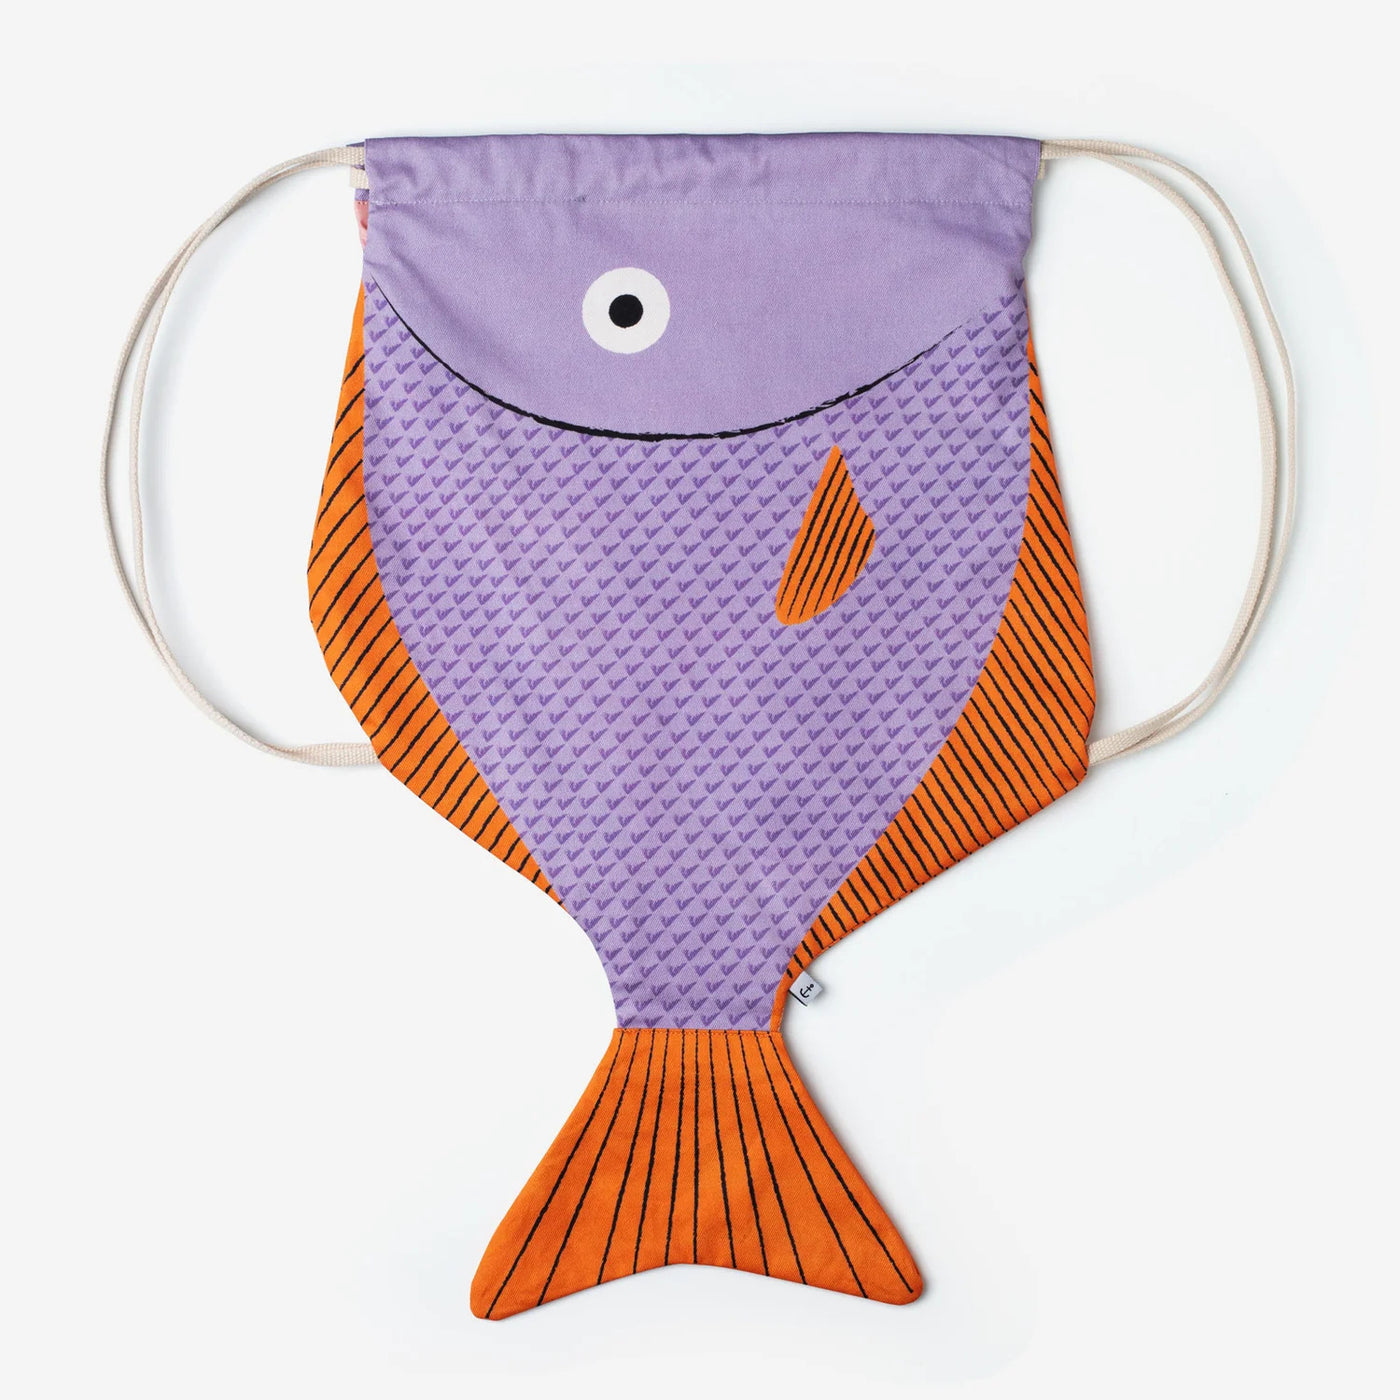 Piranha backpack